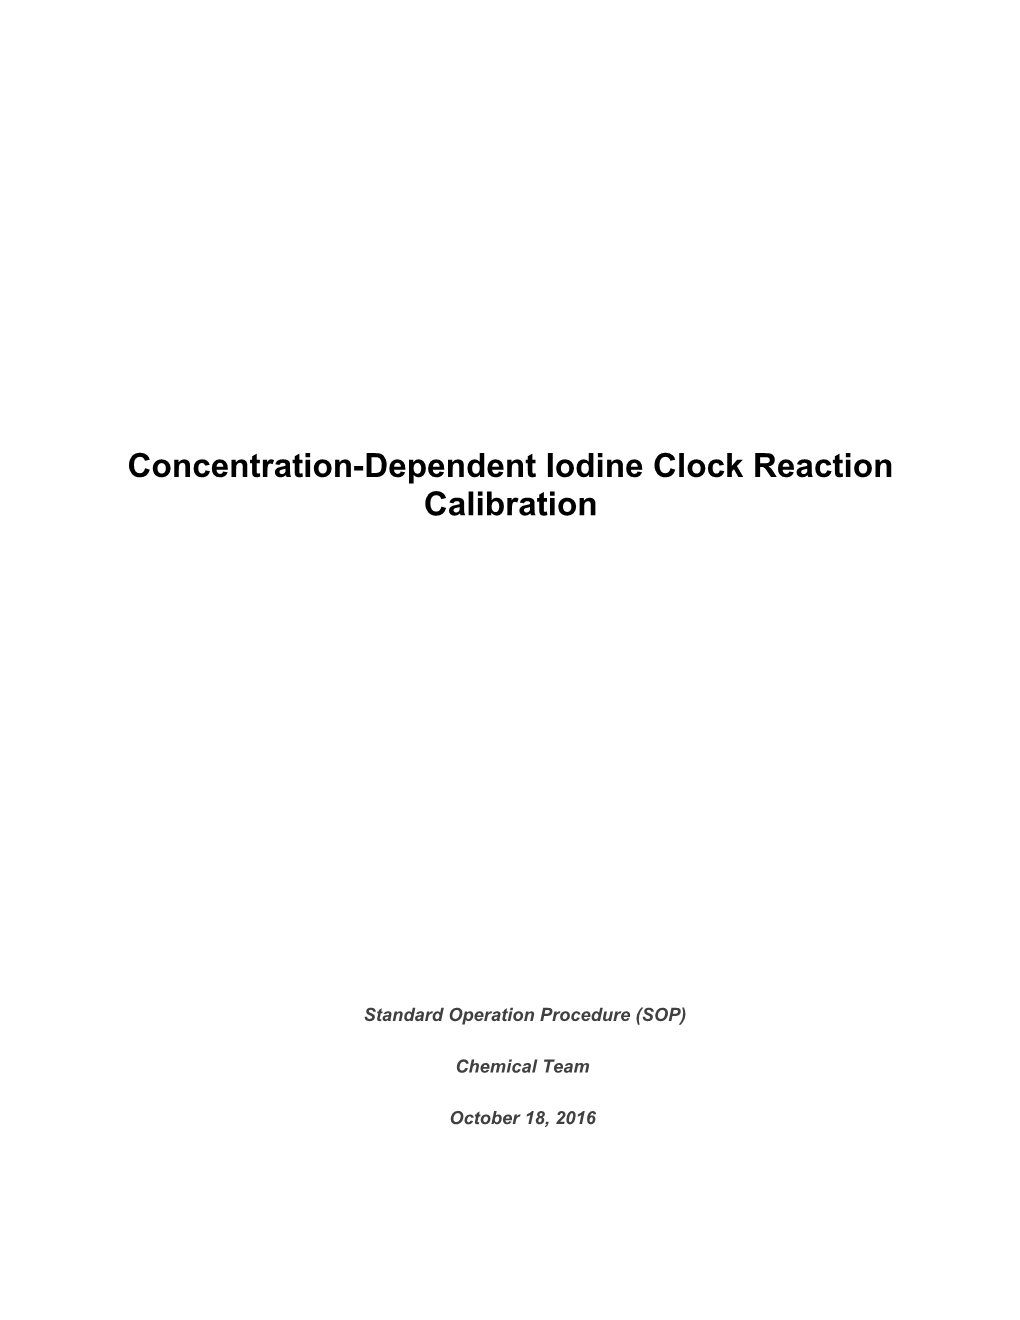 Concentration-Dependent Iodine Clock Reaction Calibration